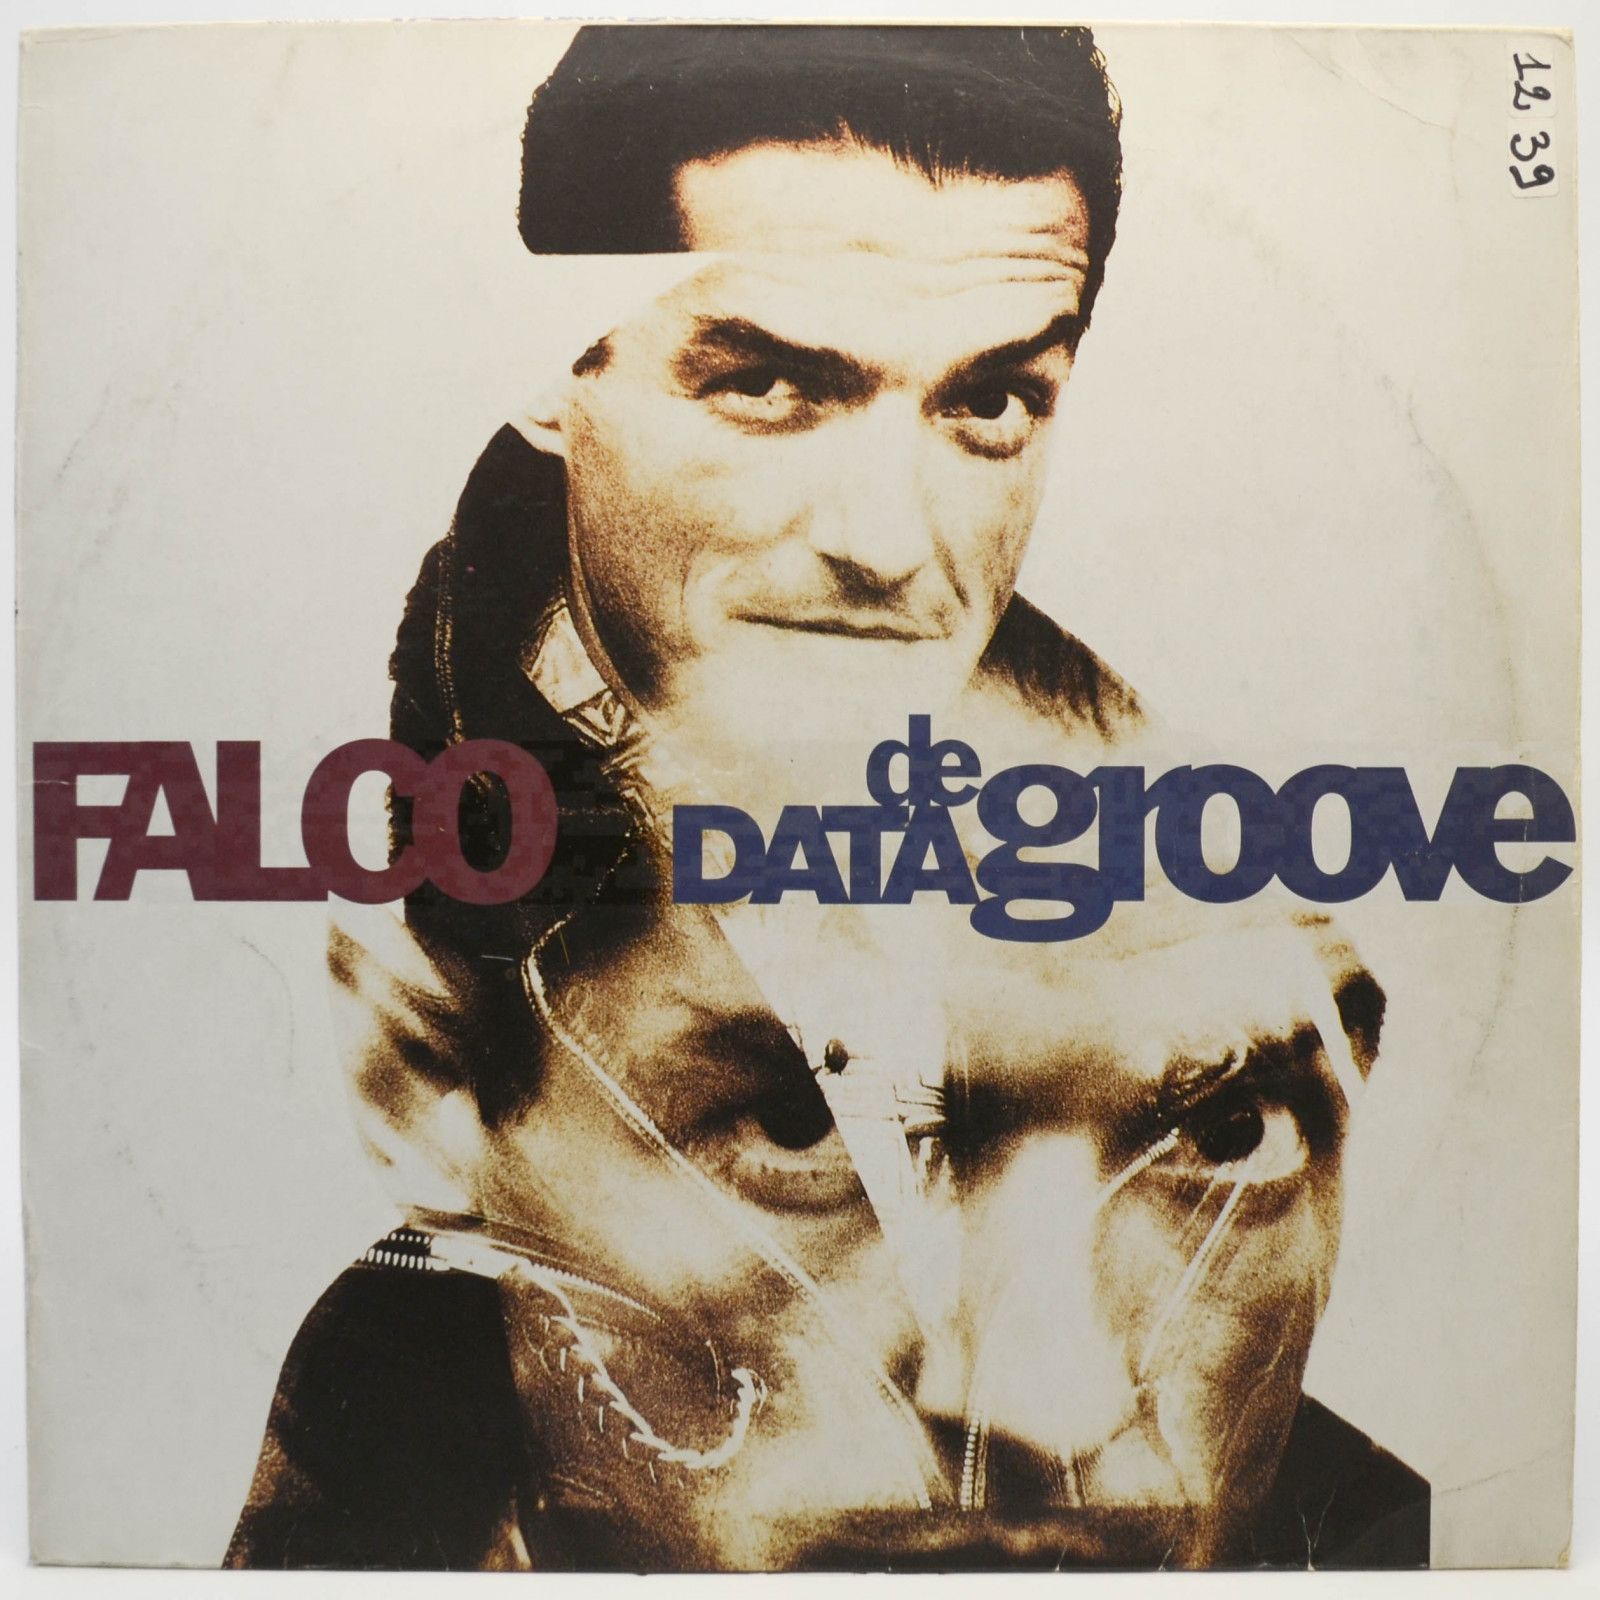 Falco — Data De Groove, 1990